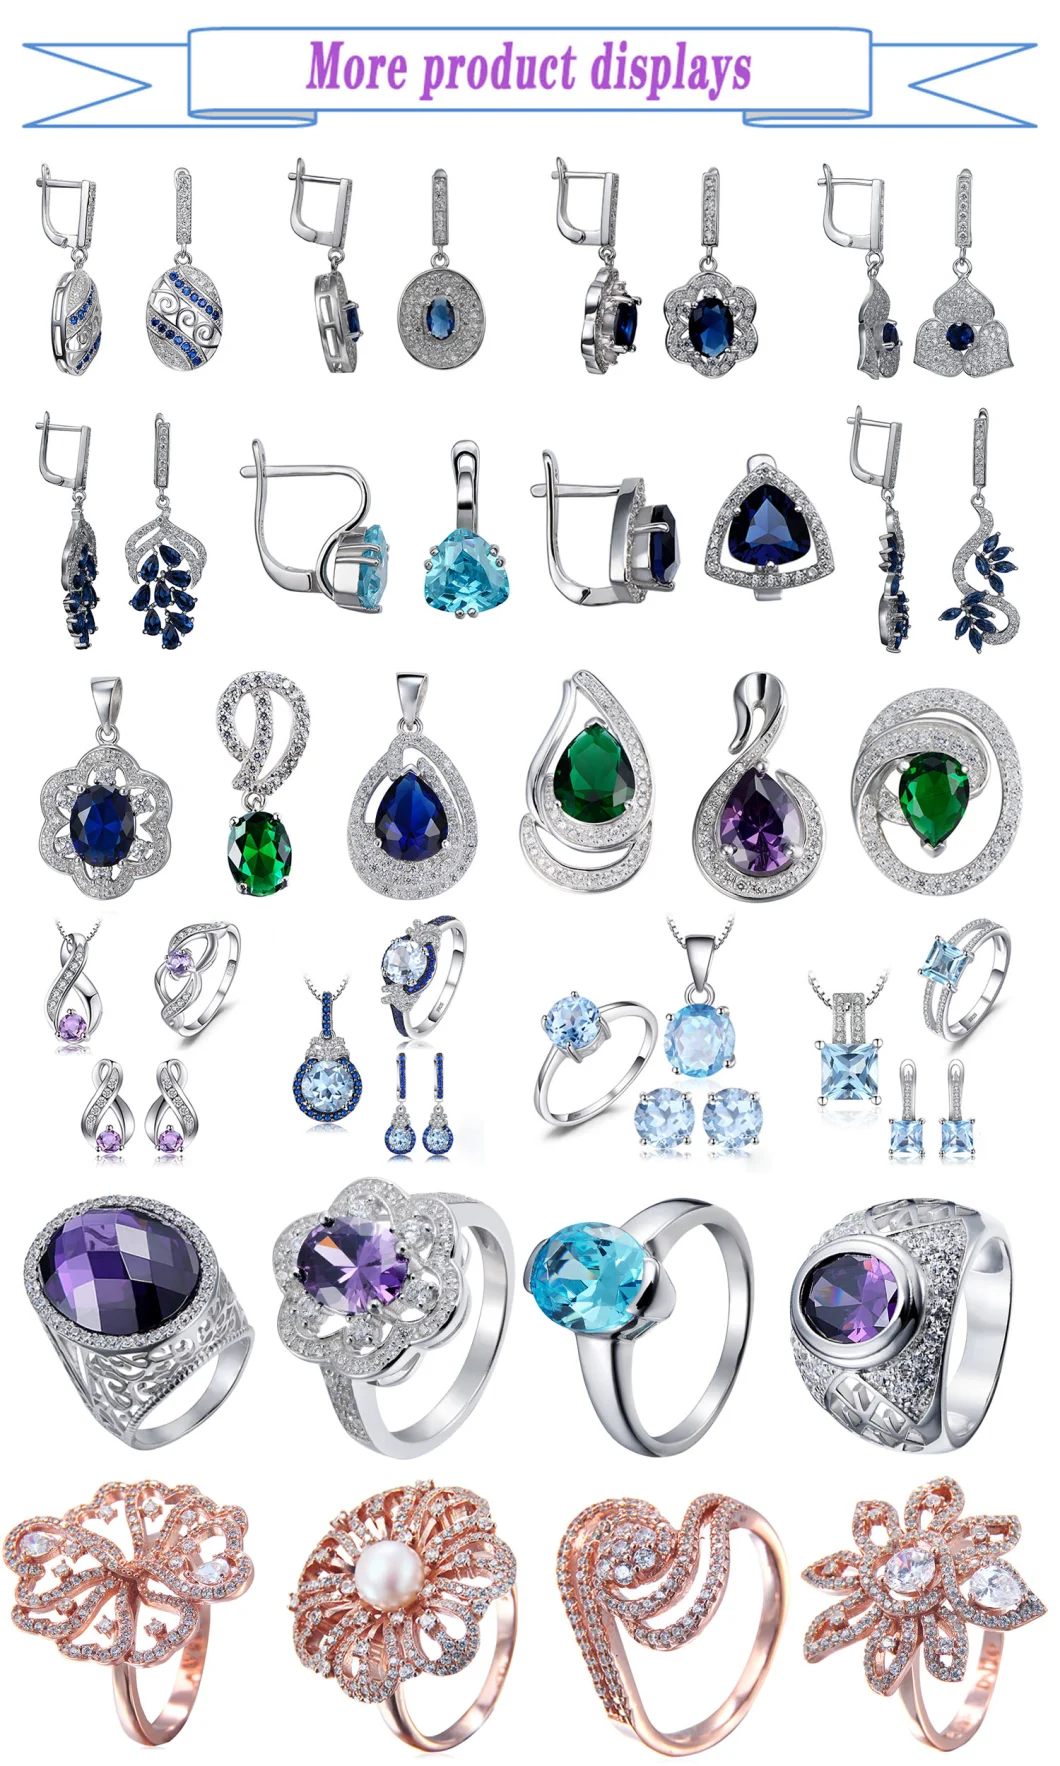 Silver Jewelry Lucky Eye Turkish Blue Evil Eye Pendant Fashion Jewelry for Women